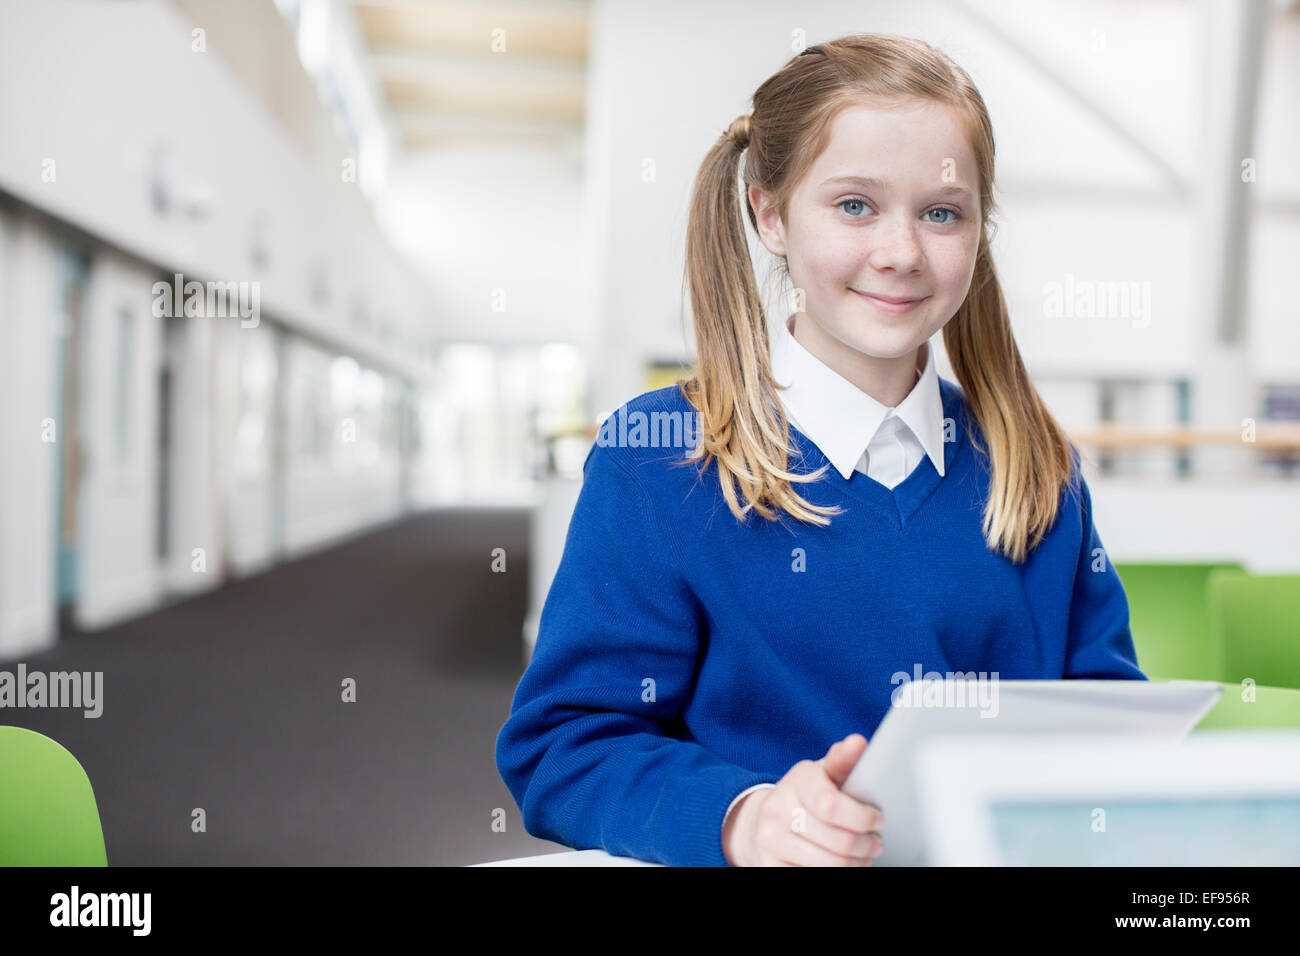 Portrait of elementary school girl with pigtails blonde holding digital tablet Banque D'Images